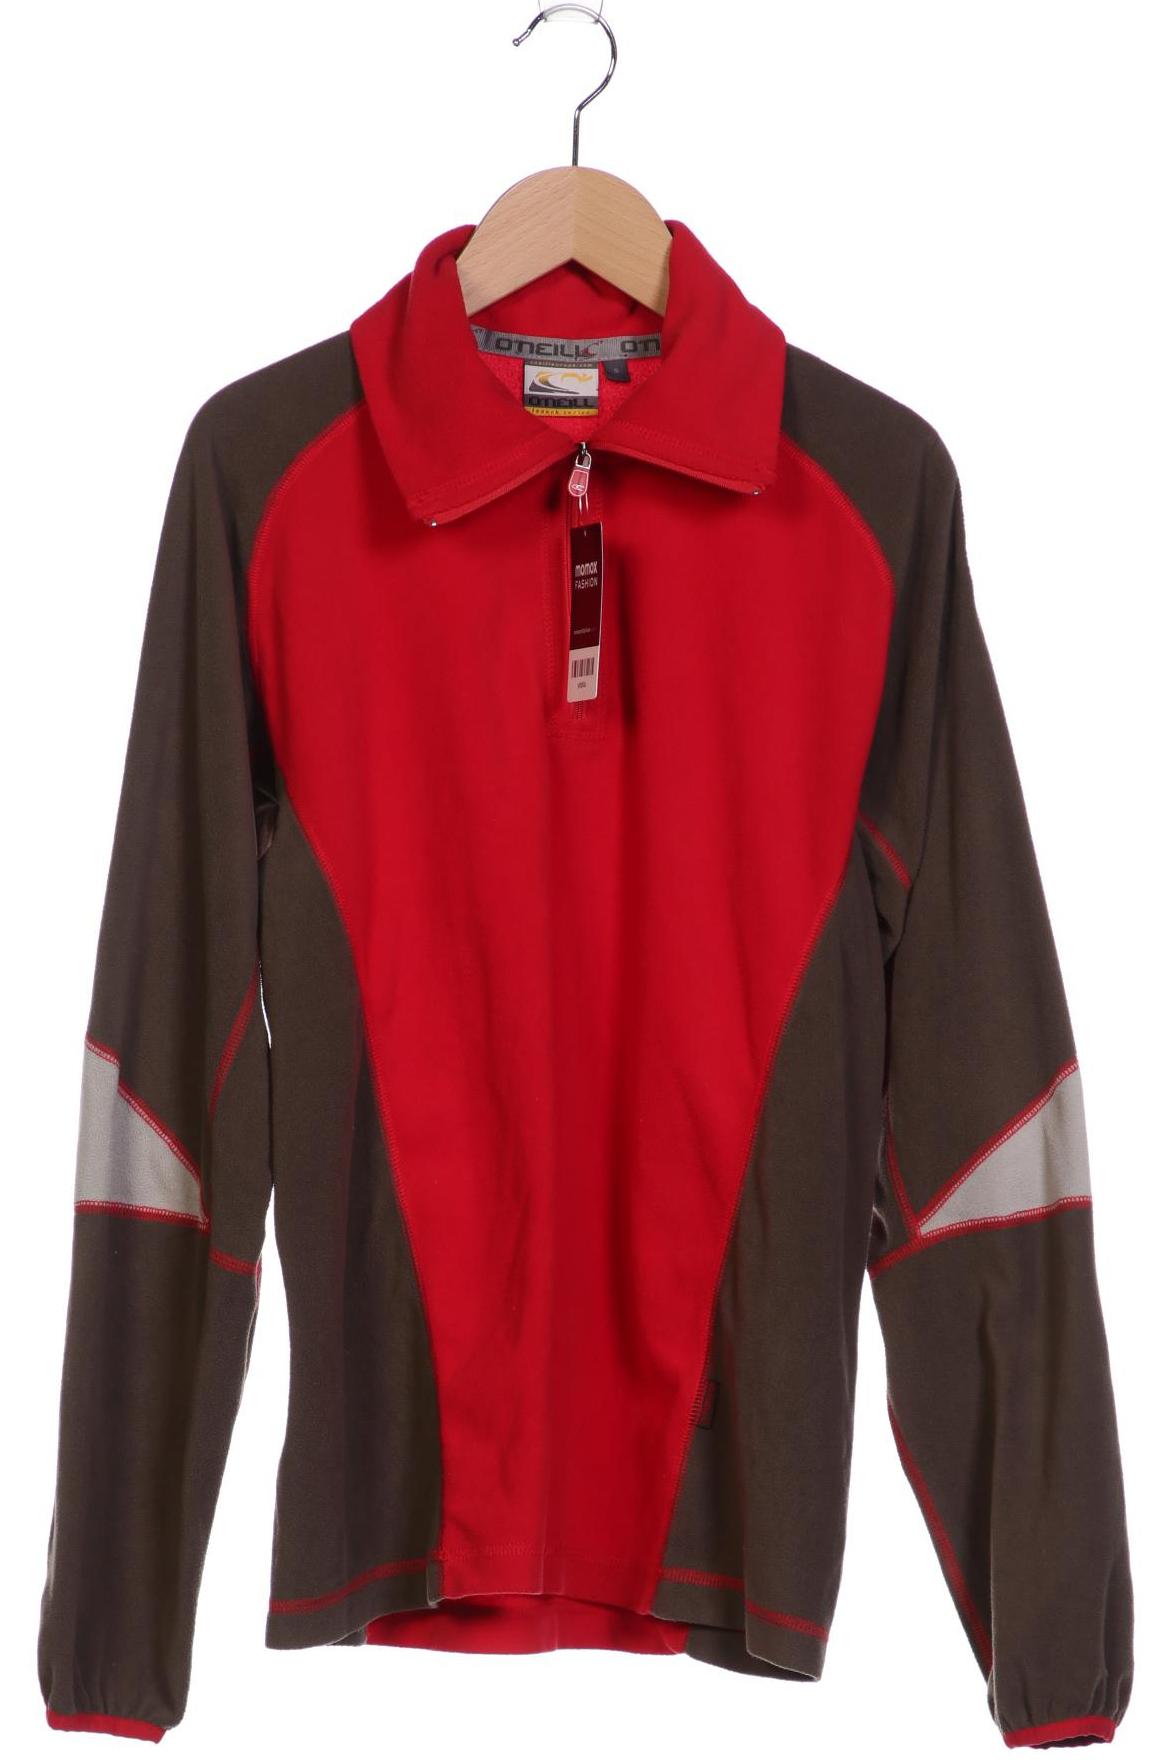 O Neill Herren Sweatshirt, rot, Gr. 46 von O Neill